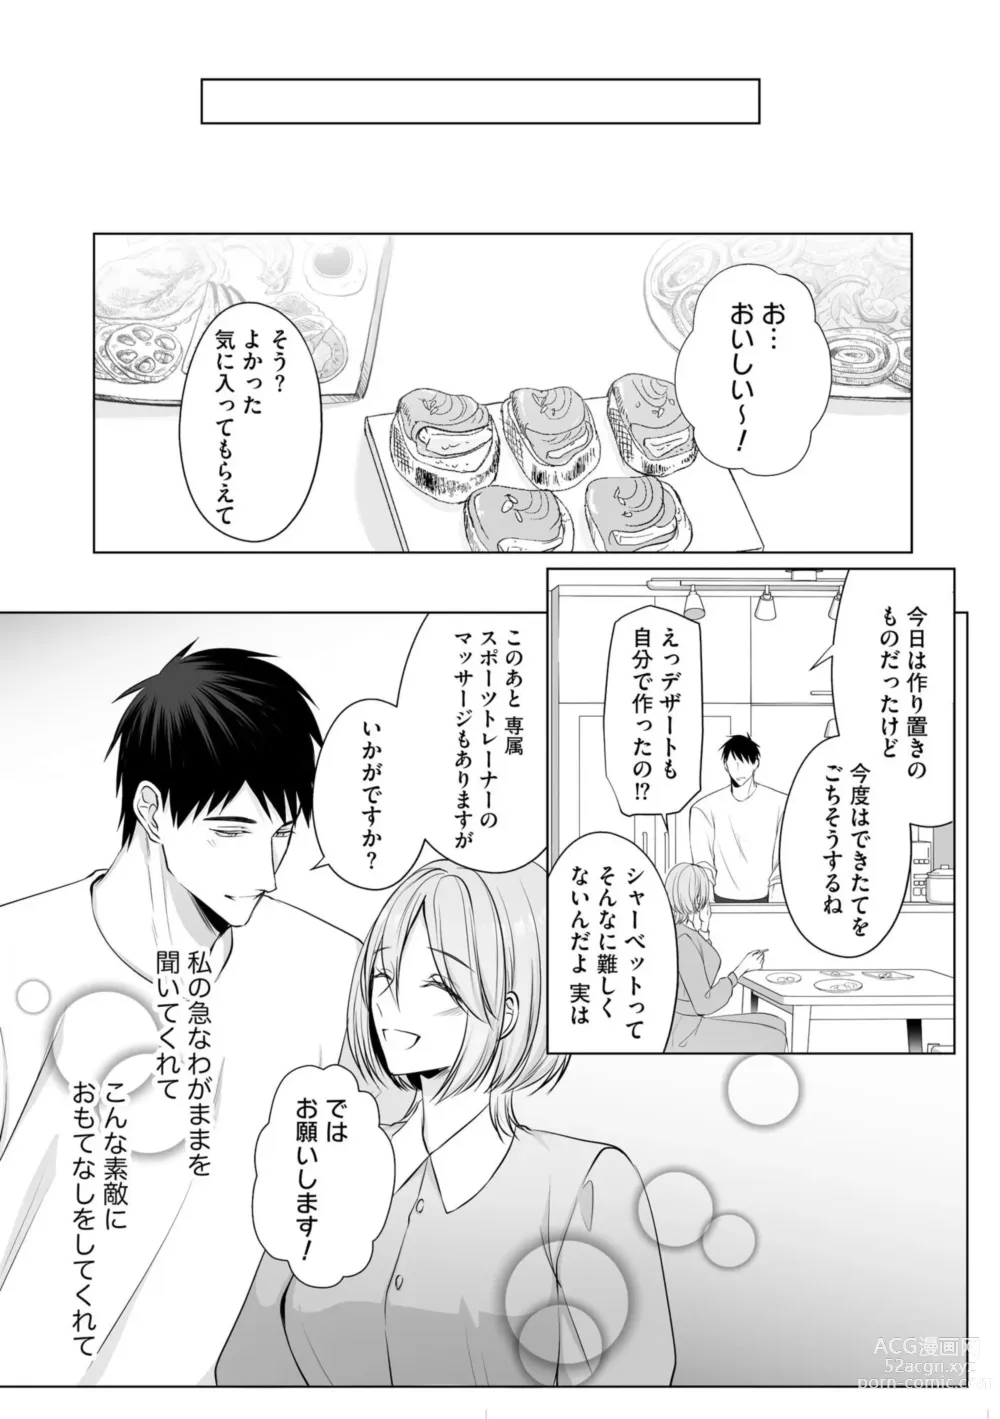 Page 7 of manga Sawayaka Wanko na Koibito wa Sugoteku AV Danyuu!! 6